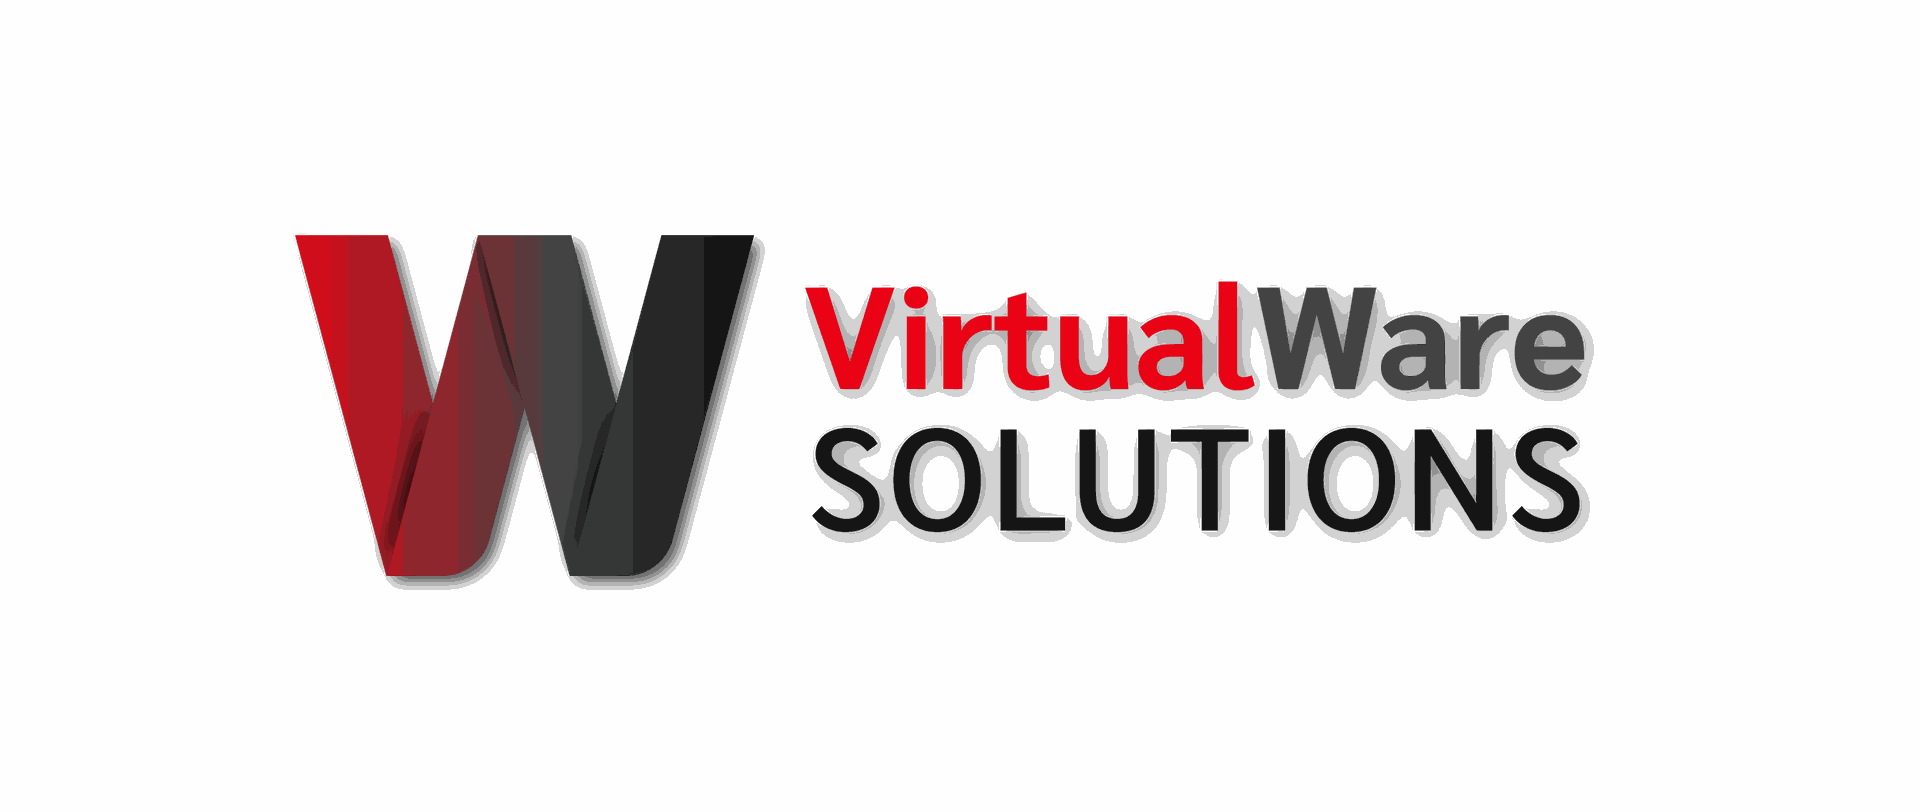 Virtualware Solutions